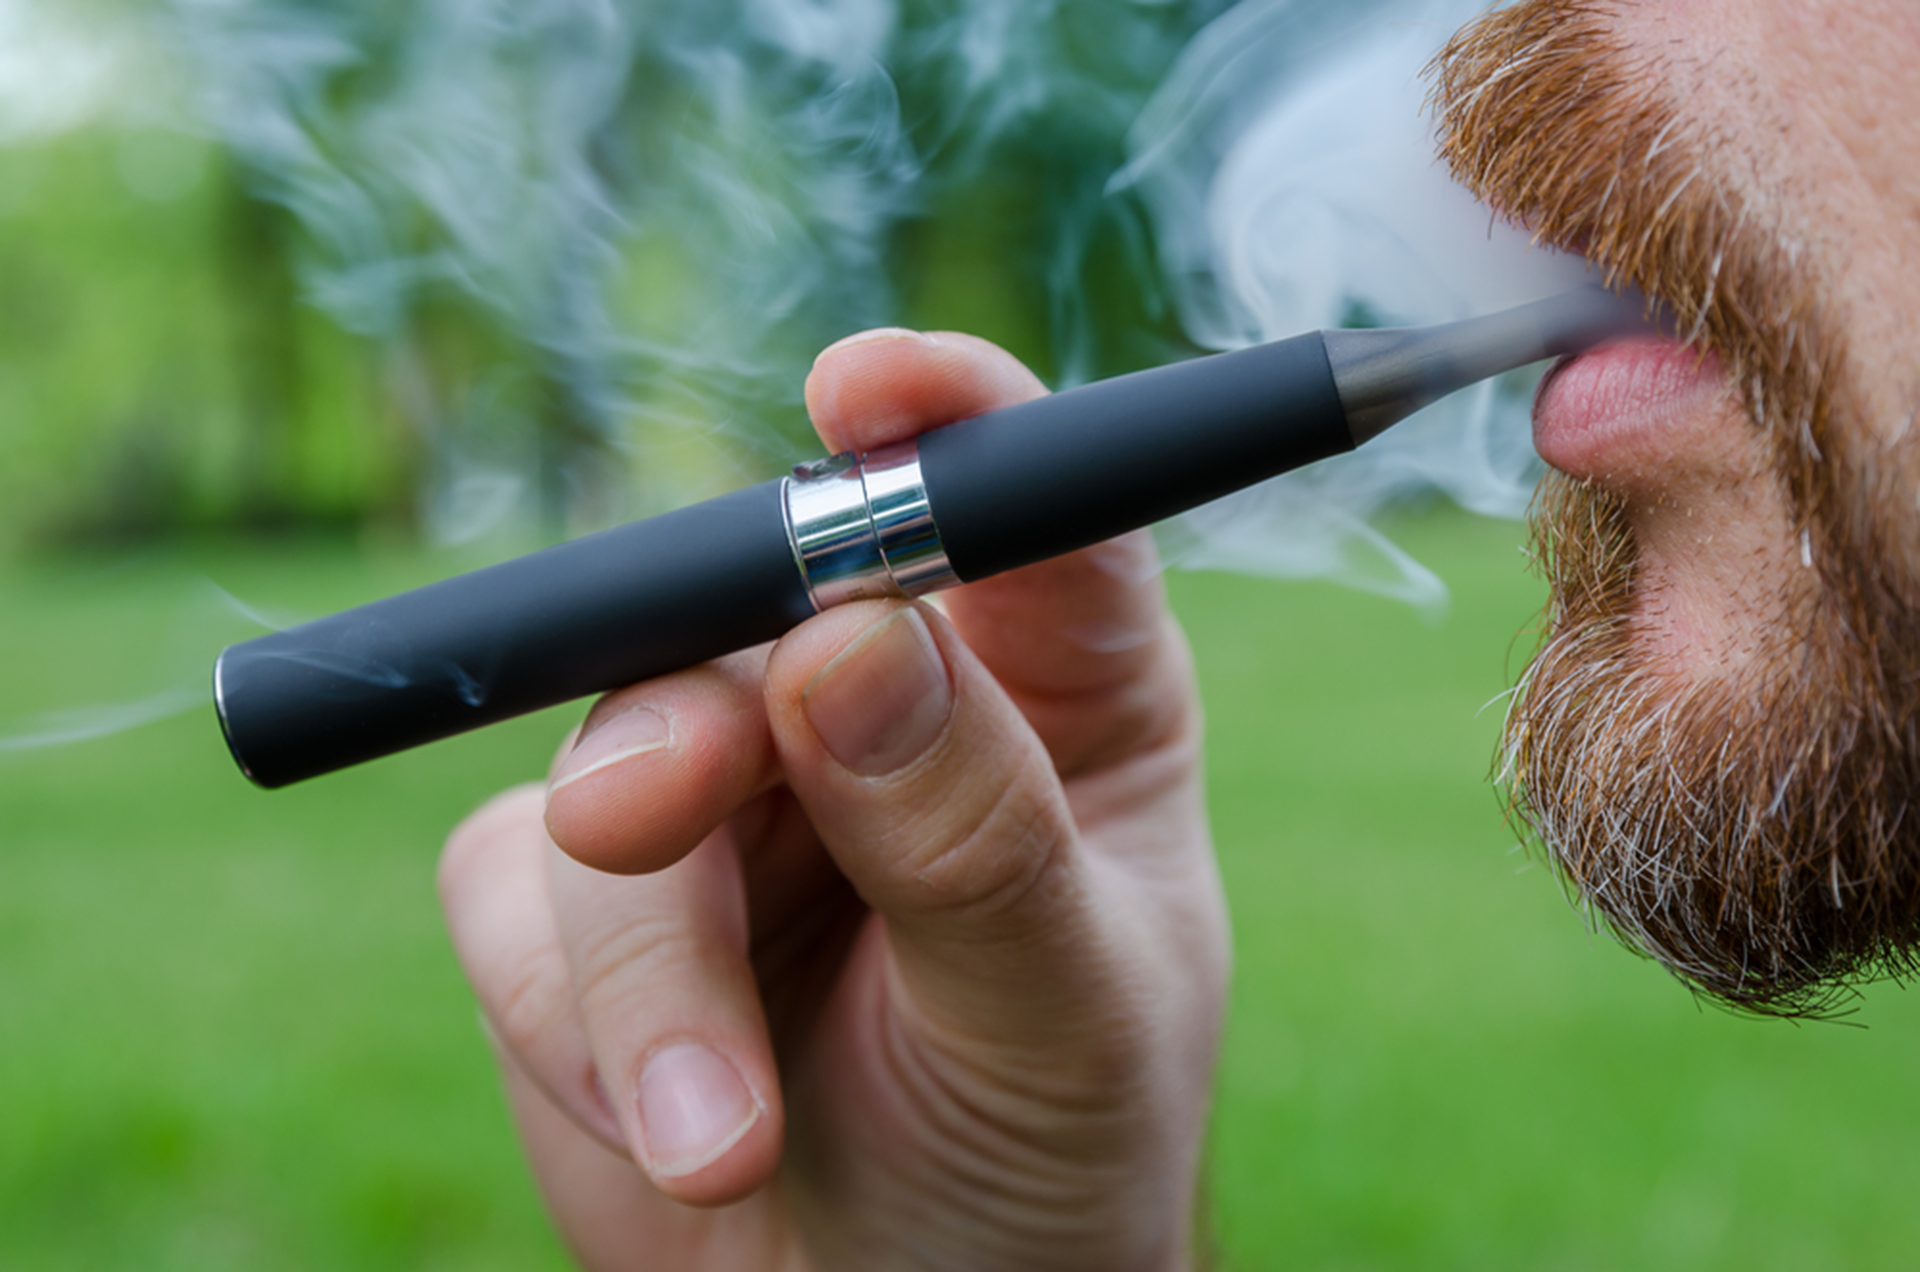 Photograph of a man using an e-cigarette.